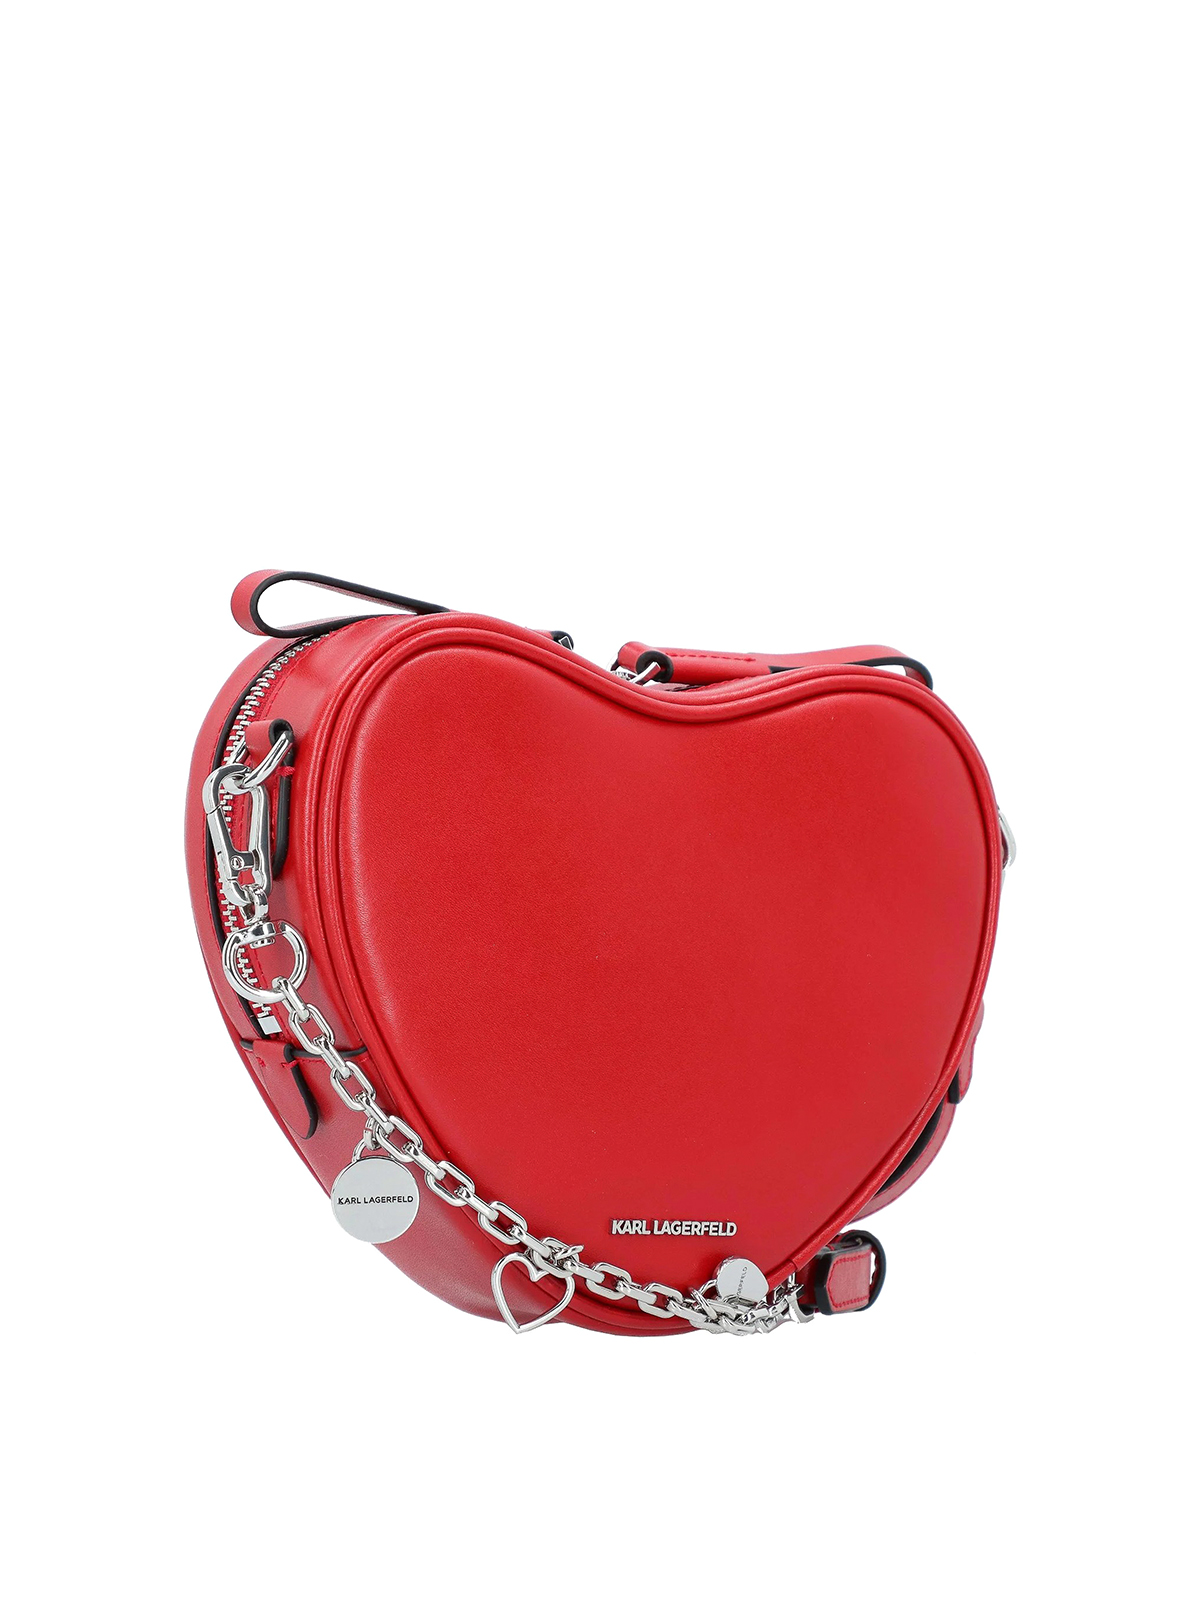 Vivienne Westwood Victoria New Heart Shoulder Bag In Burgundy In Red